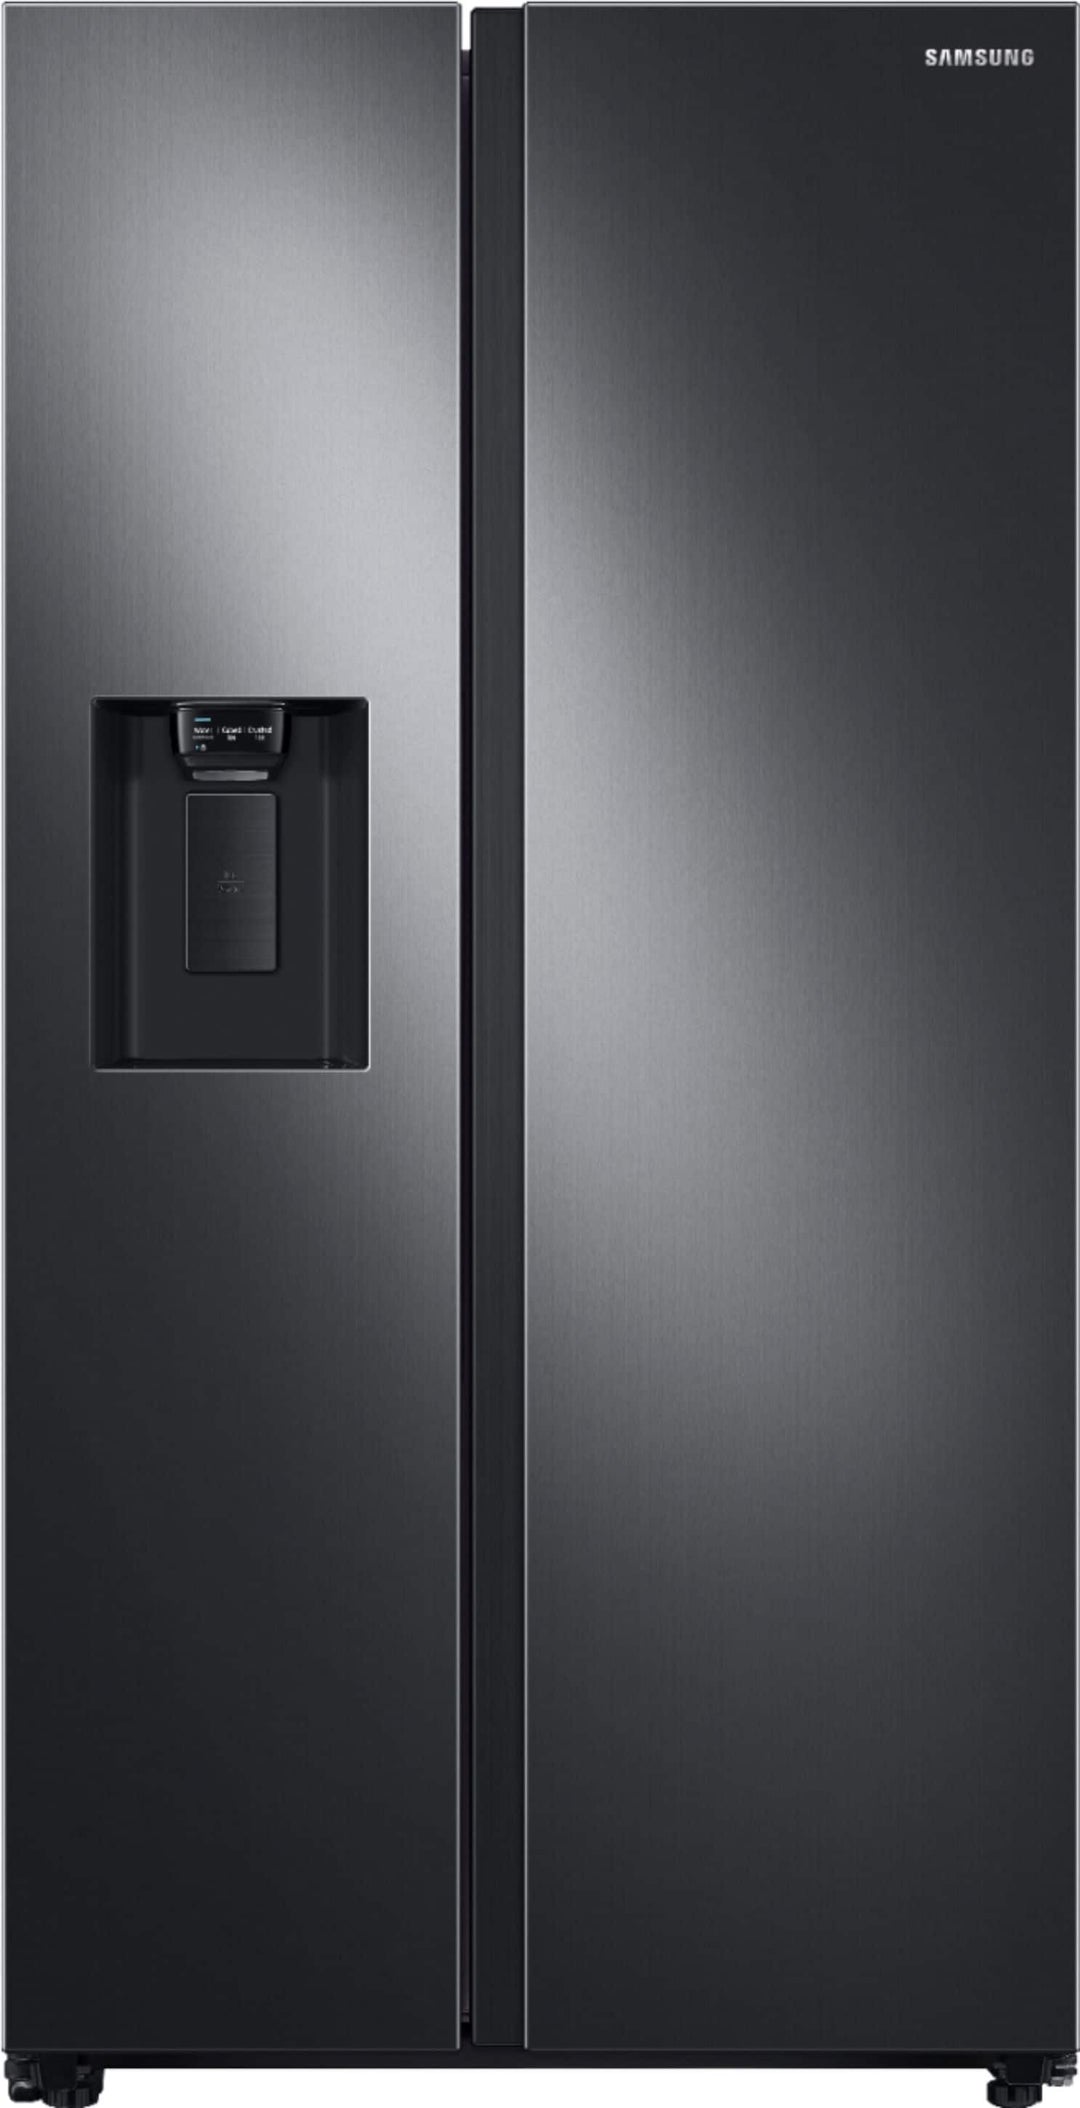 Samsung - 27.4 Cu. Ft. Side-by-Side Refrigerator - Black stainless steel_0